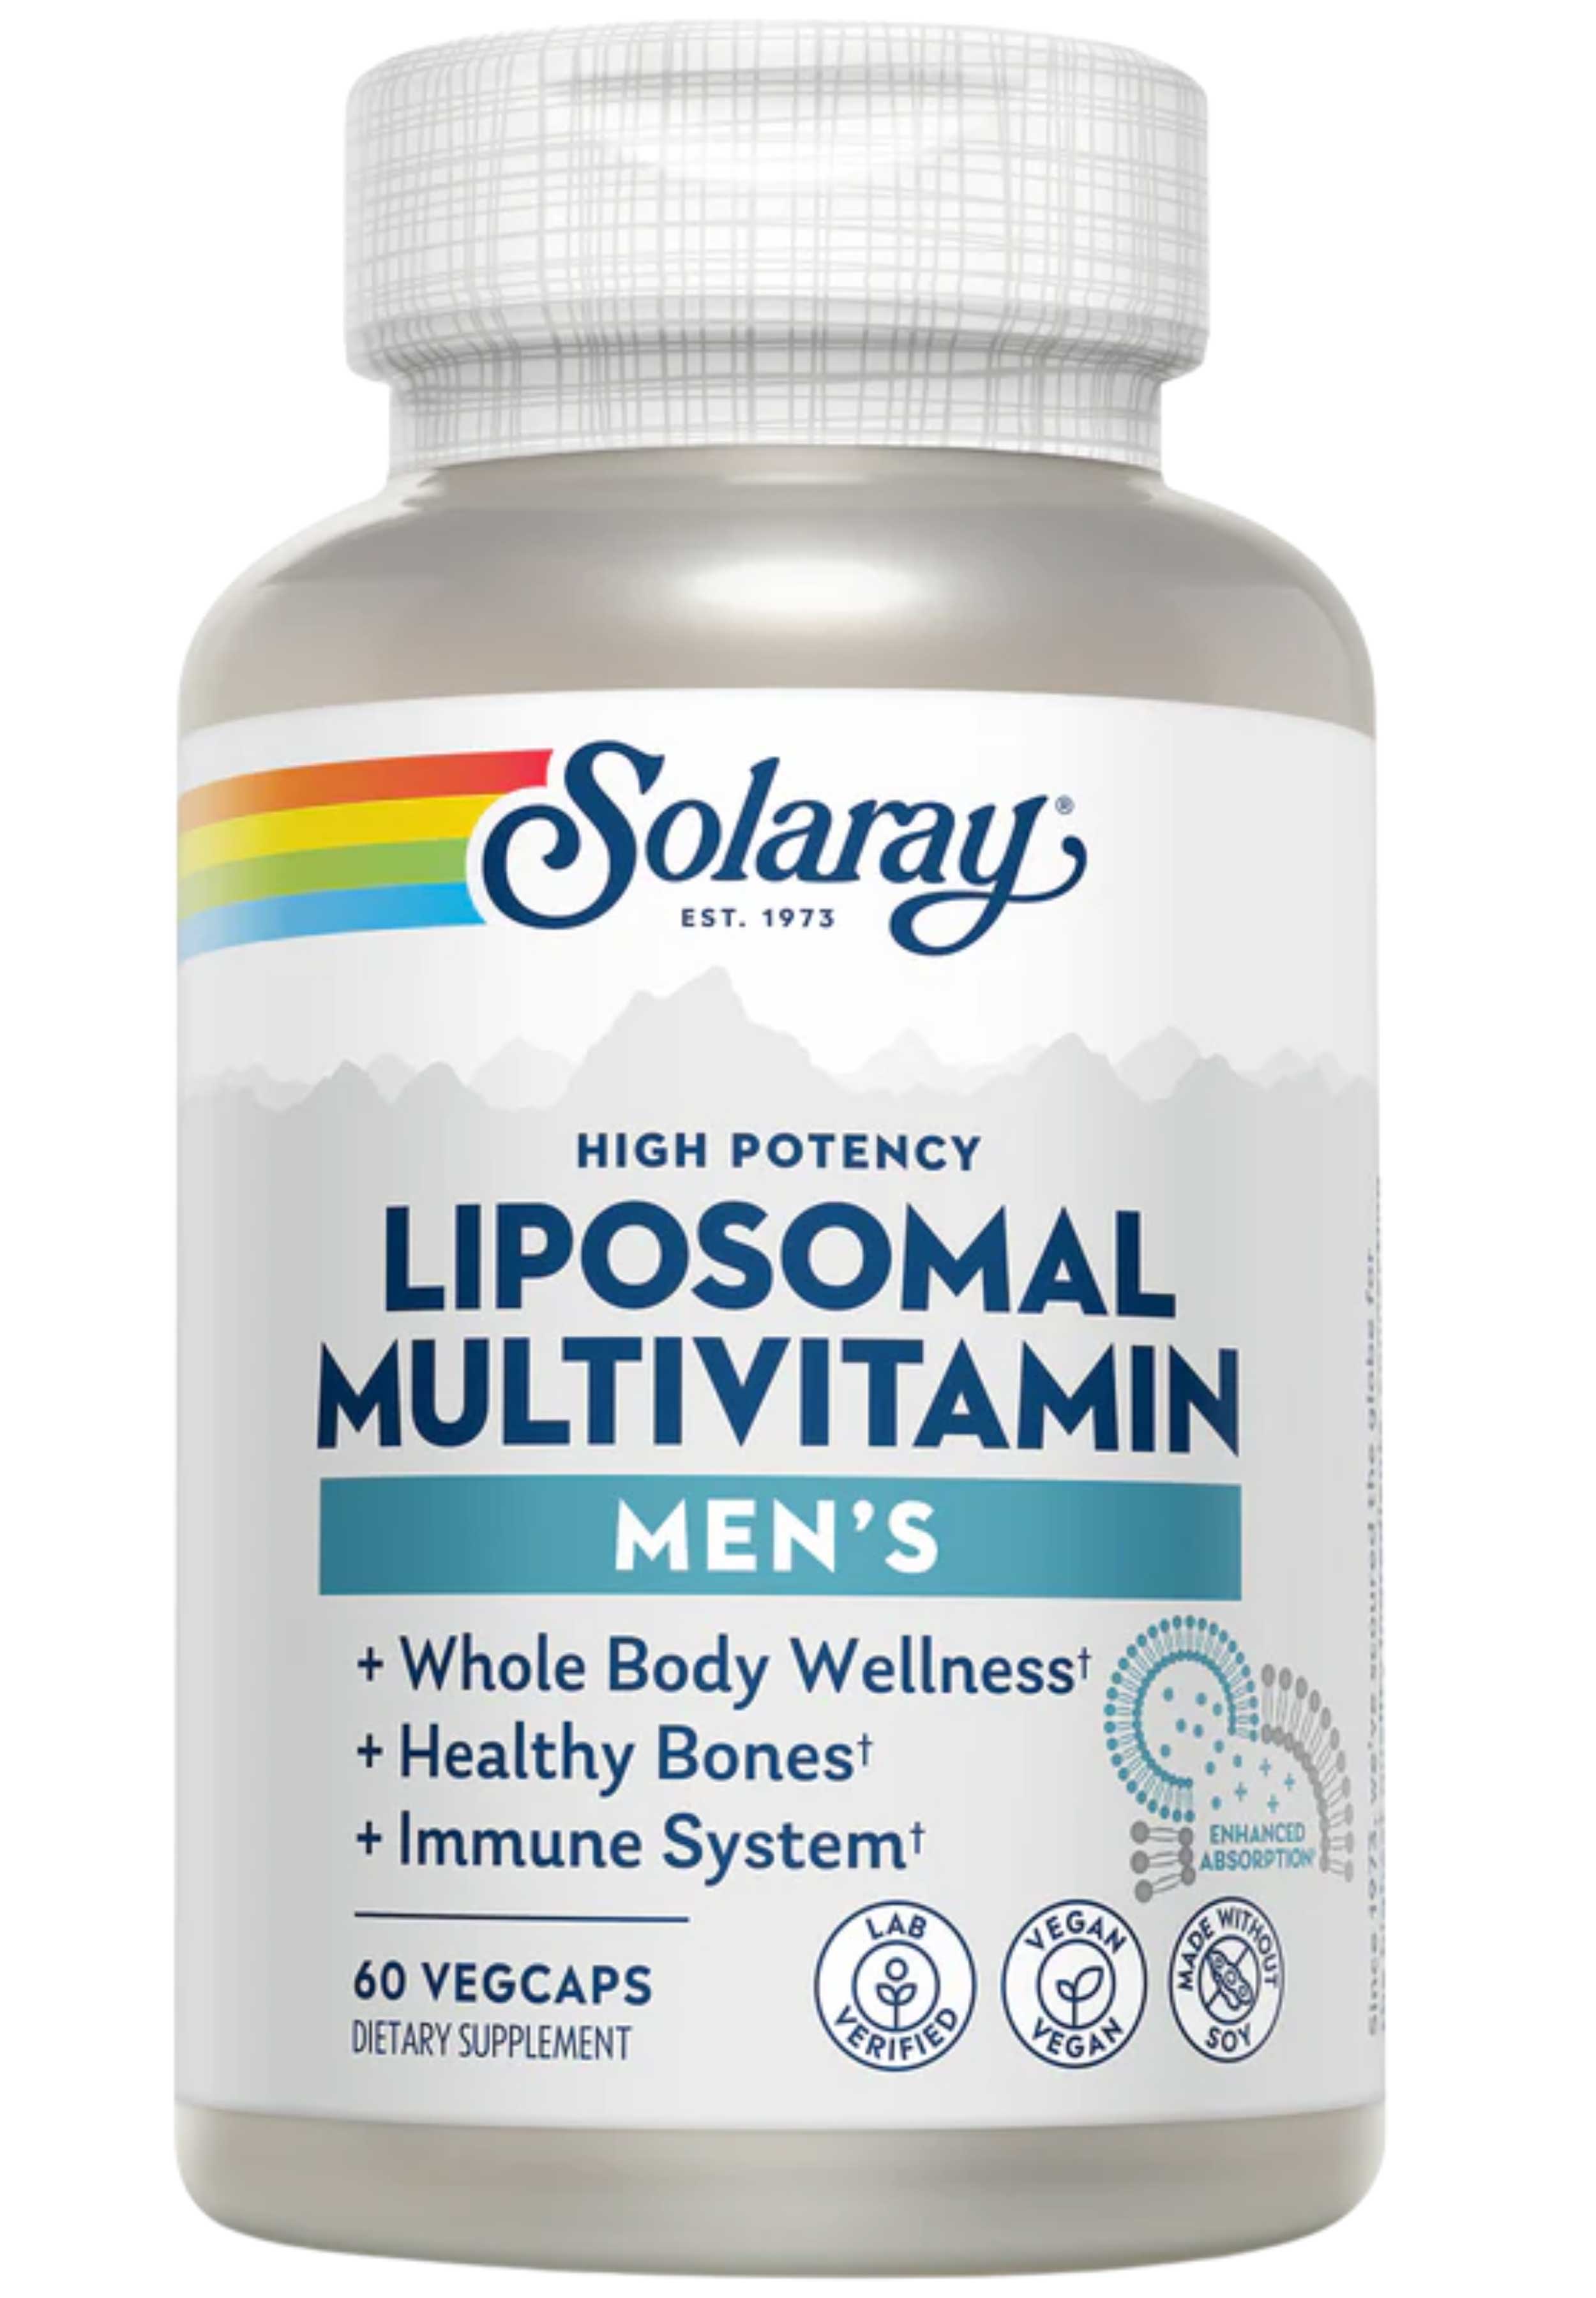 Solaray Liposomal Men's MultiVitamin